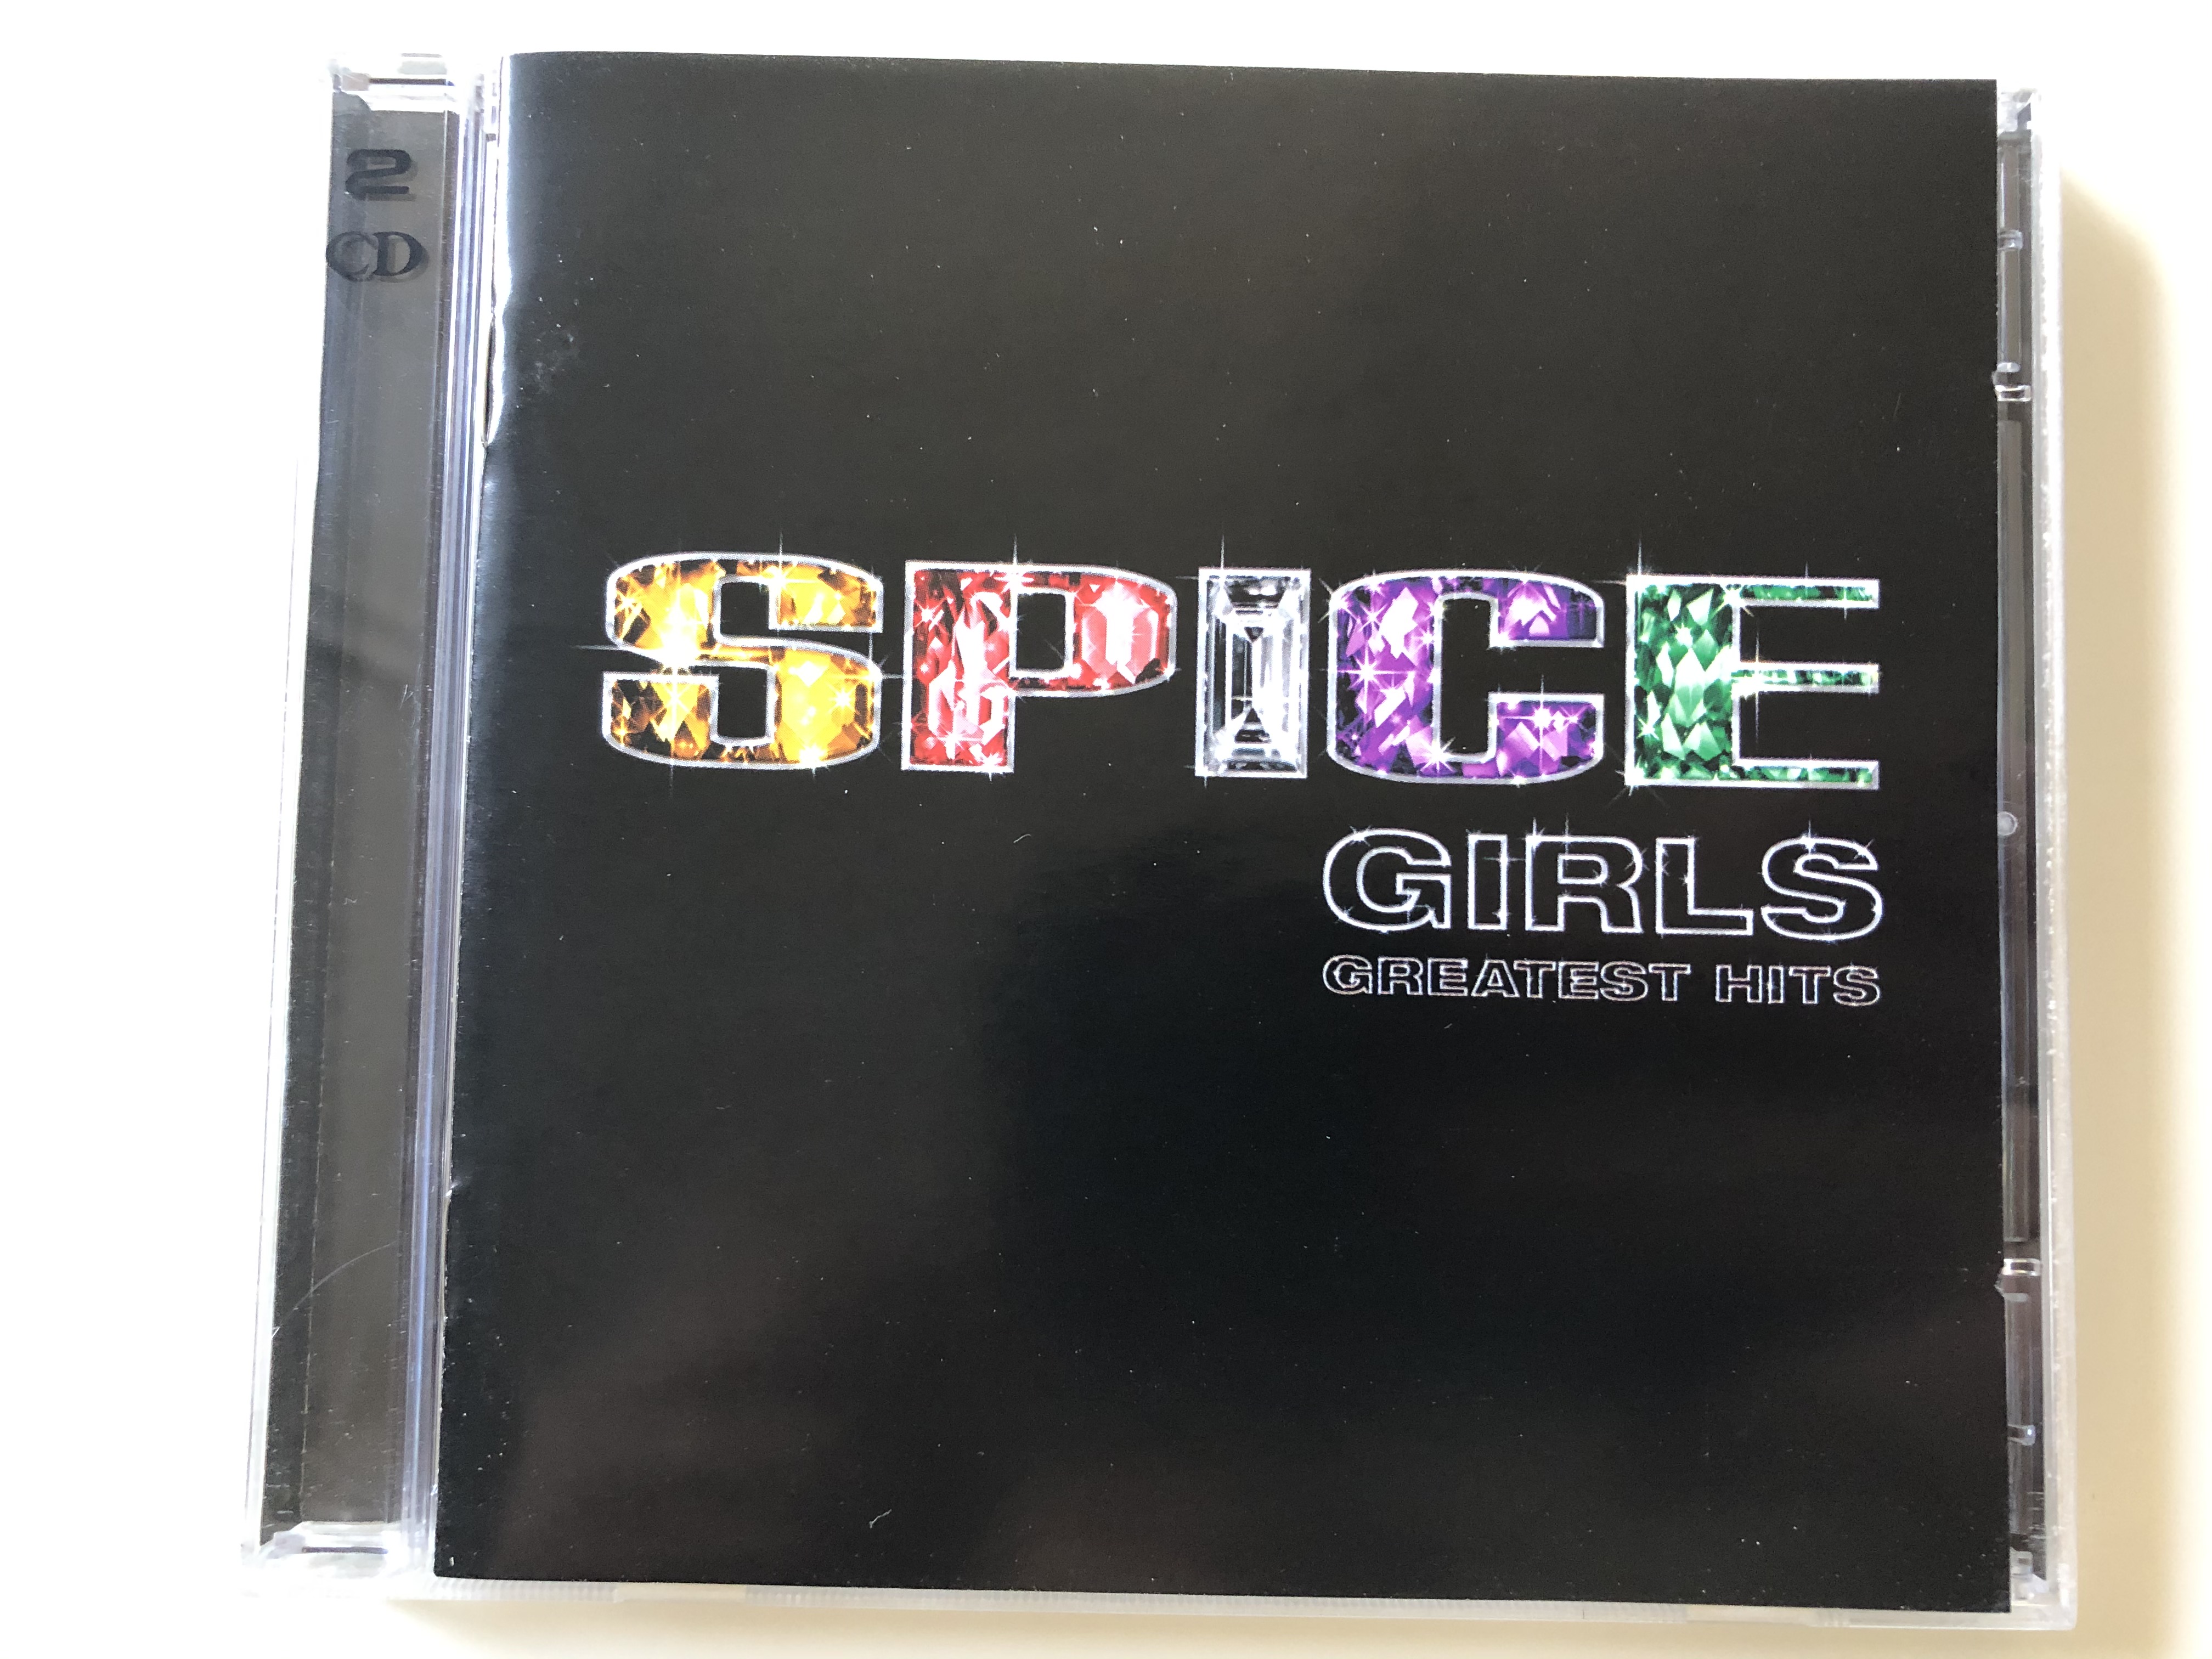 spice-girls-greatest-hits-virgin-2x-audio-cd-2007-5099950777921-1-.jpg